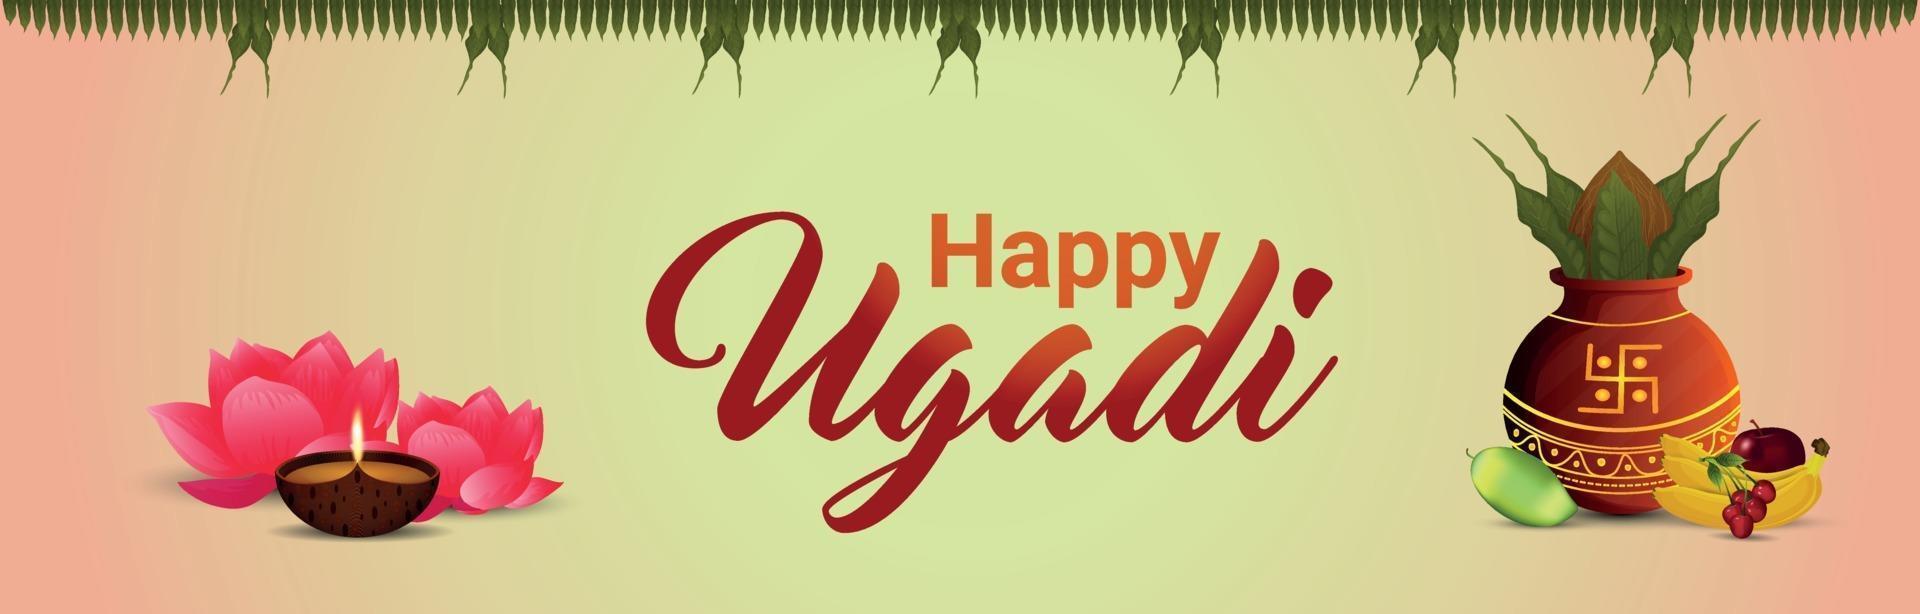 happy gudi padwa o happy ugadi banner o header vettore